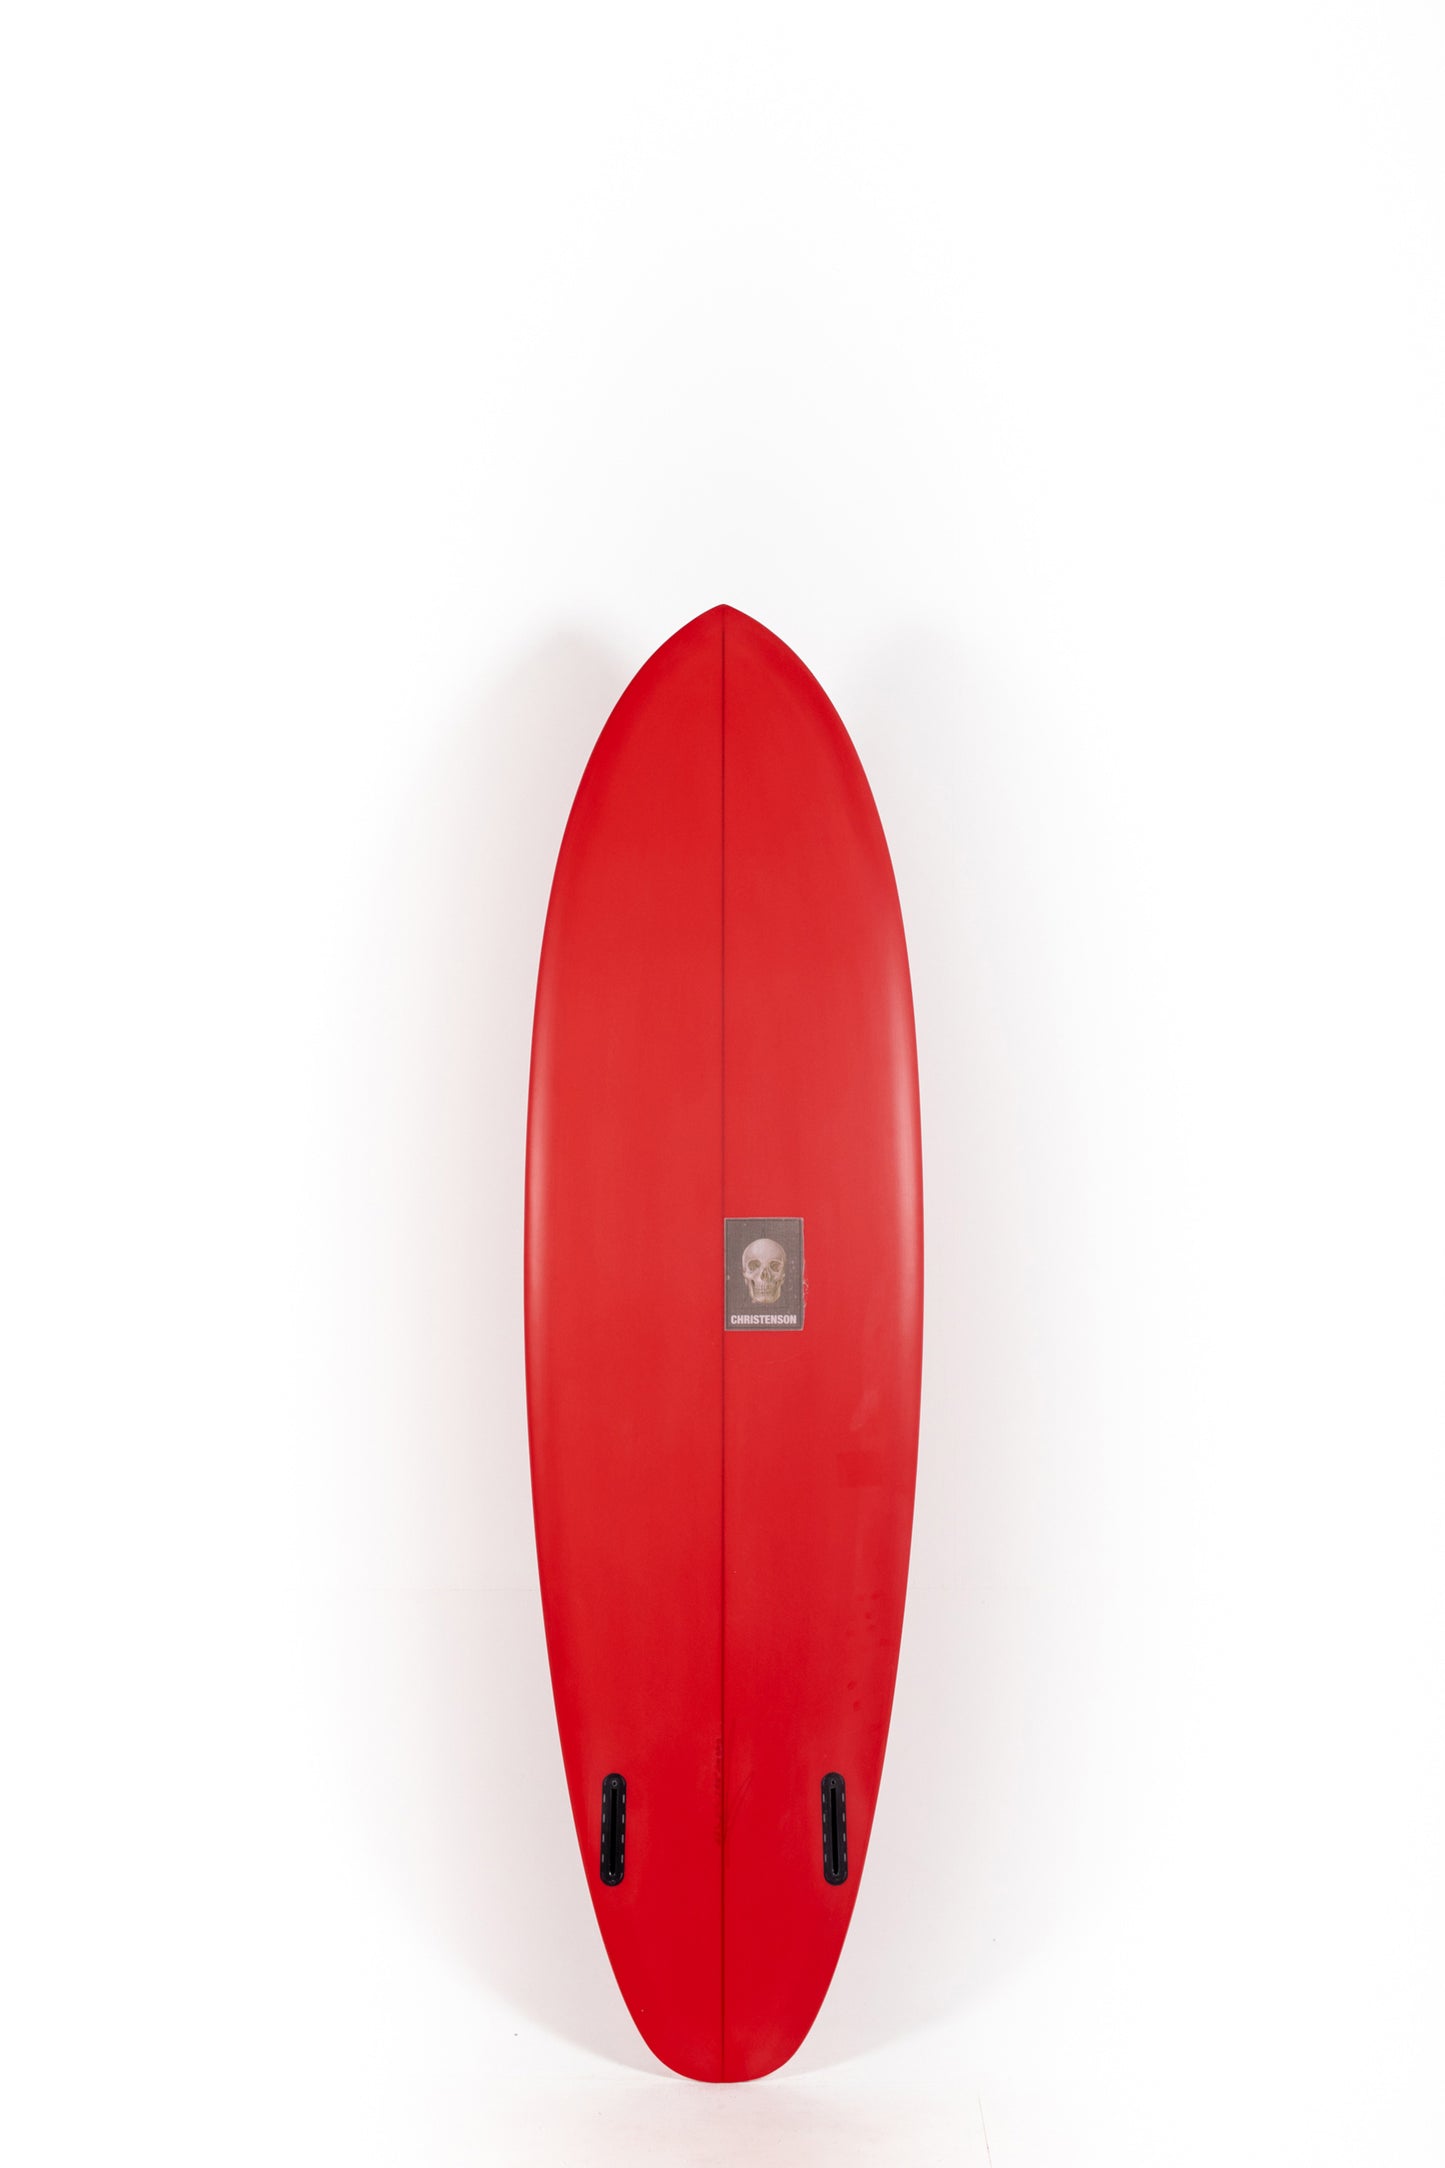 Pukas Surf Shop - Christenson Surfboards - TWIN TRACKER - 6'6" x 21 x 2 5/8 - CX03303